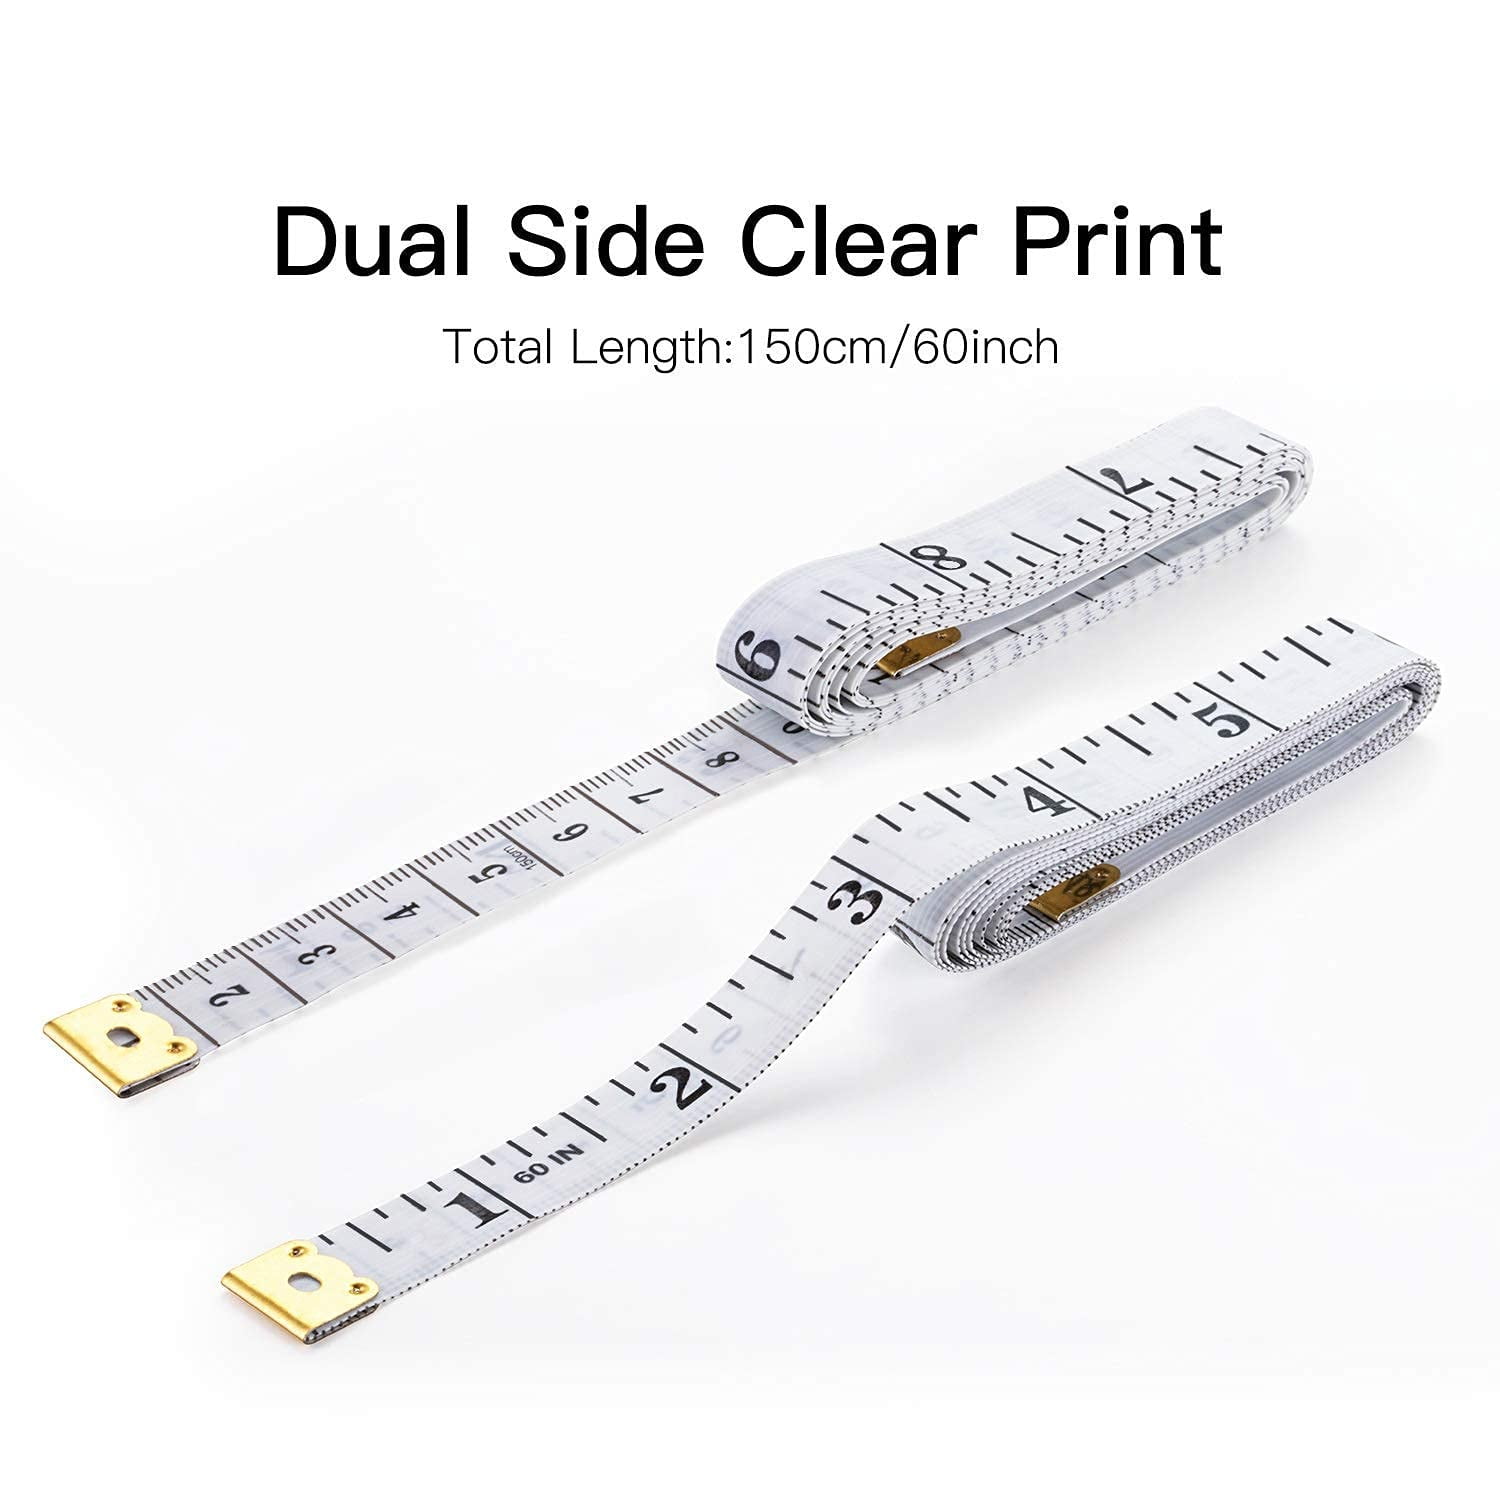 510-116 Tape Measure 60 / 150cm